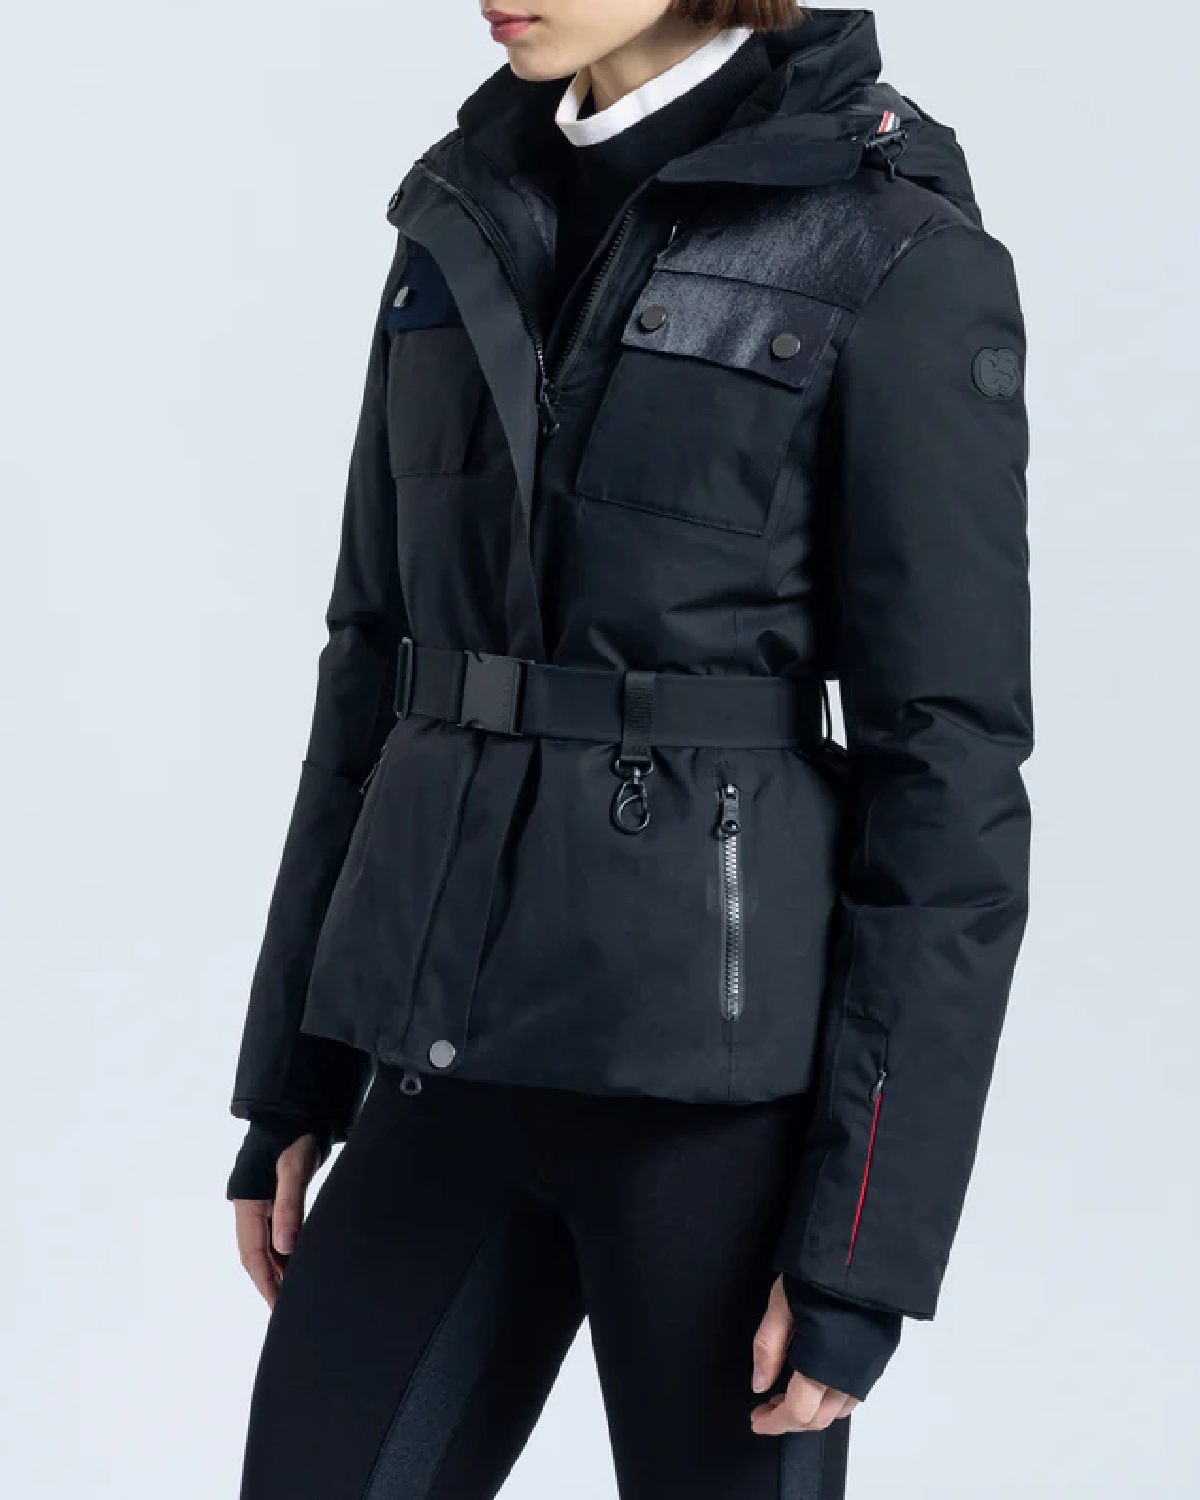 Erin Snow Women's Diana Jacket in Eco Sporty - Black